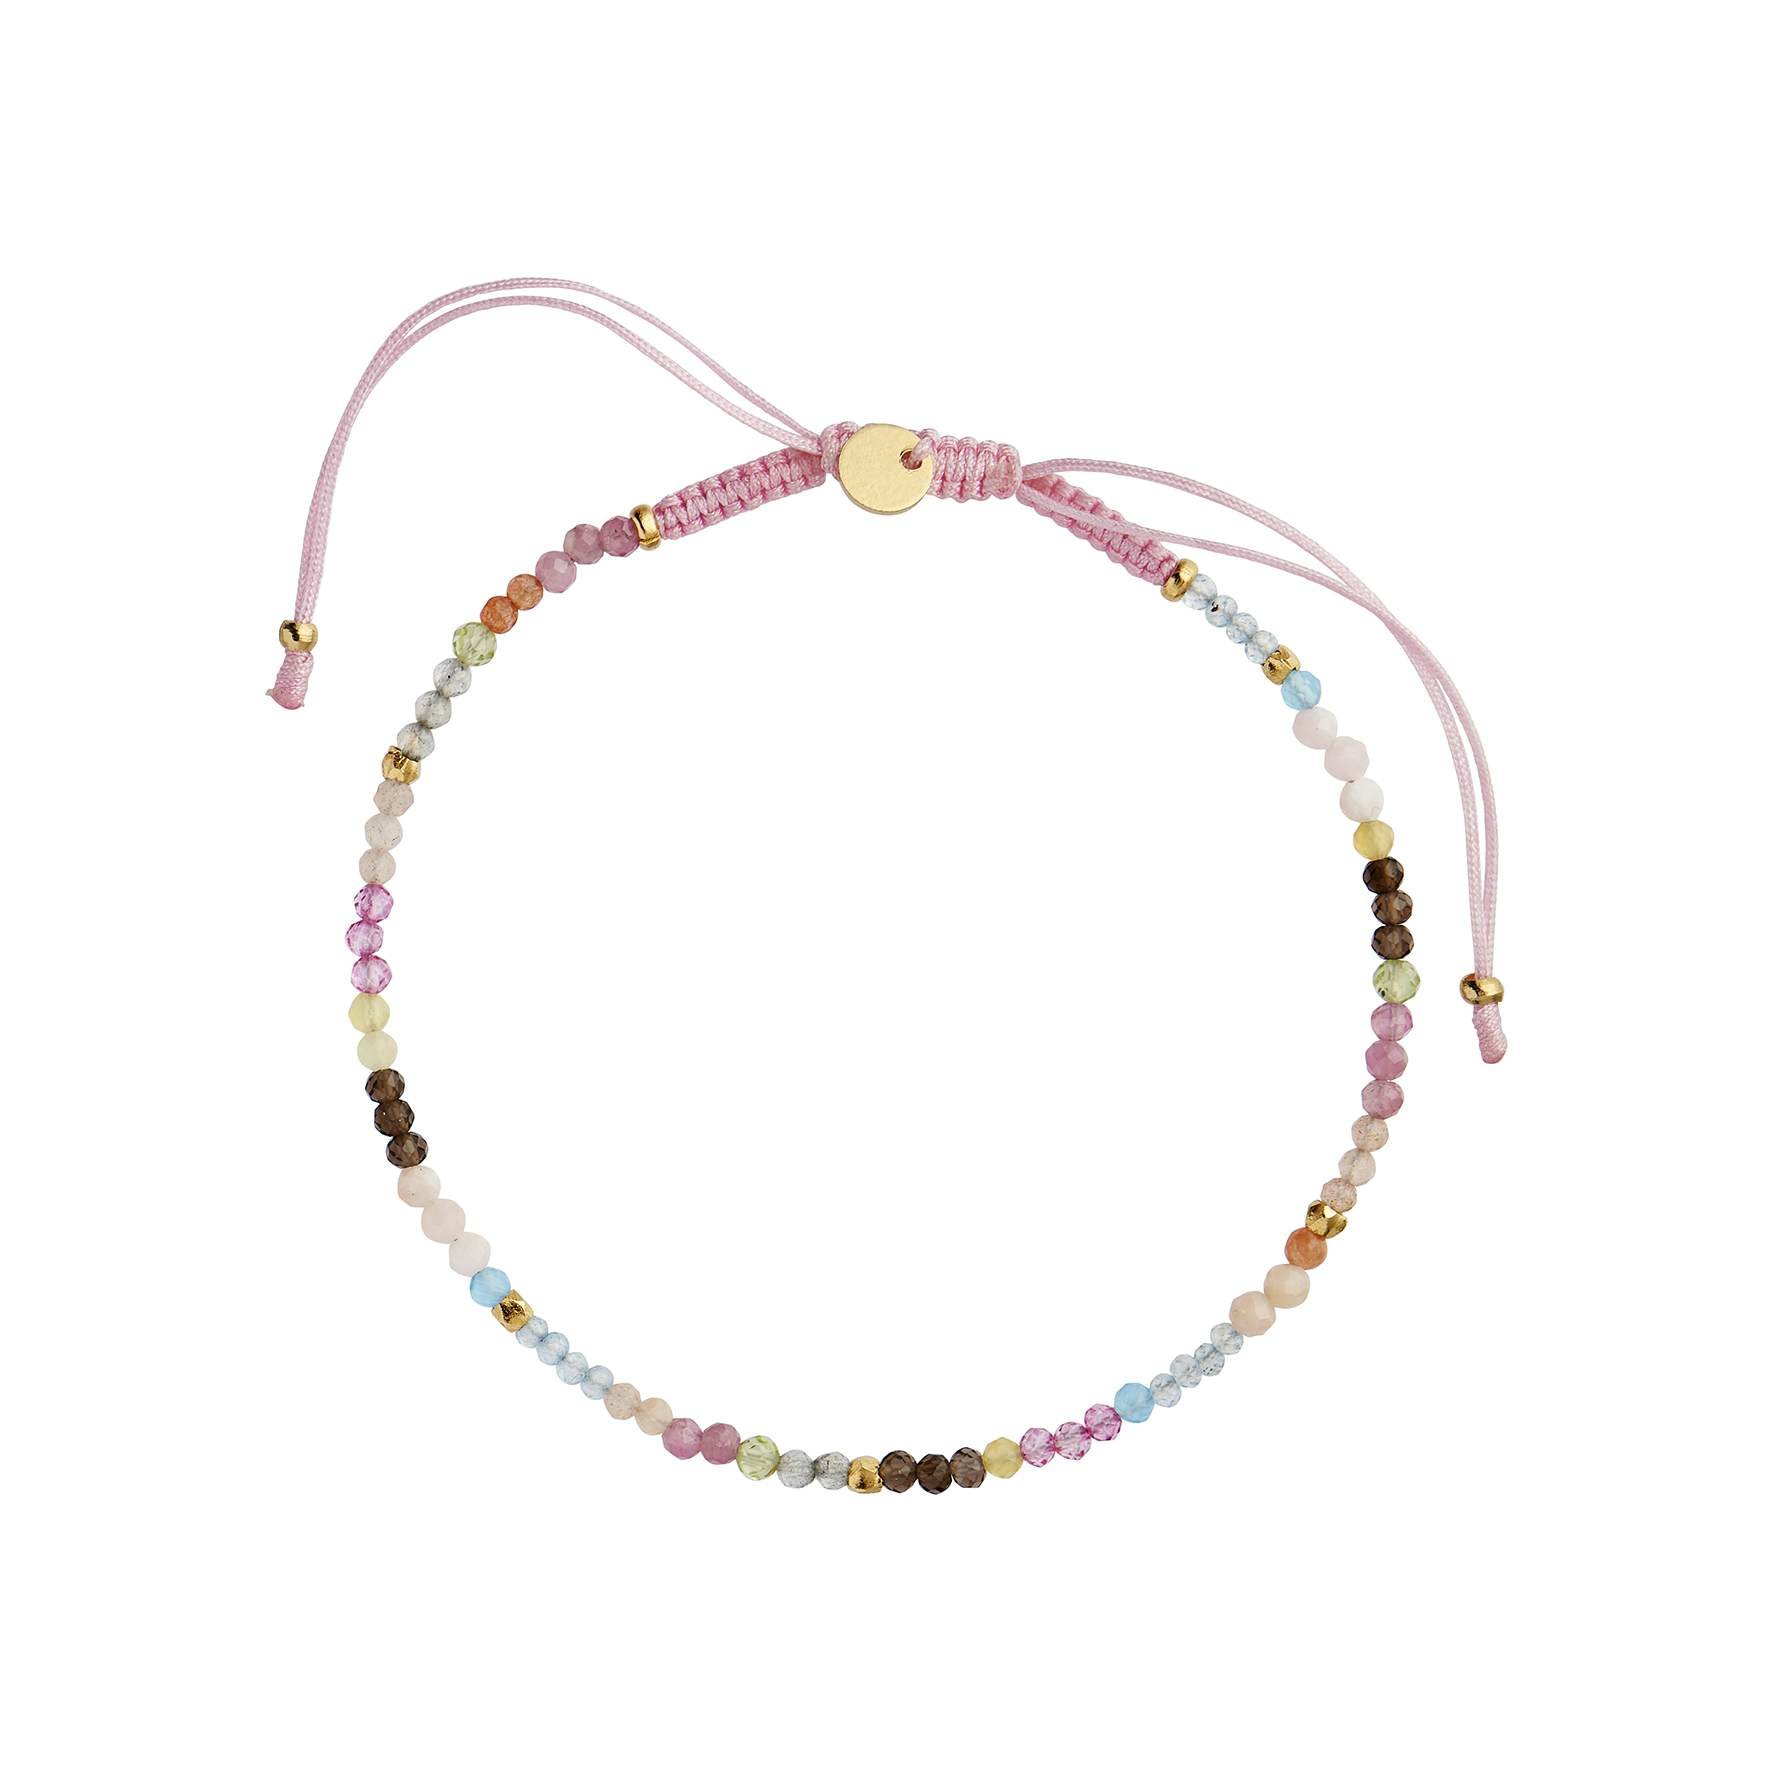 Candyfloss Rainbow Bracelet Mix With Light Pink Ribbon från STINE A Jewelry i Nylon